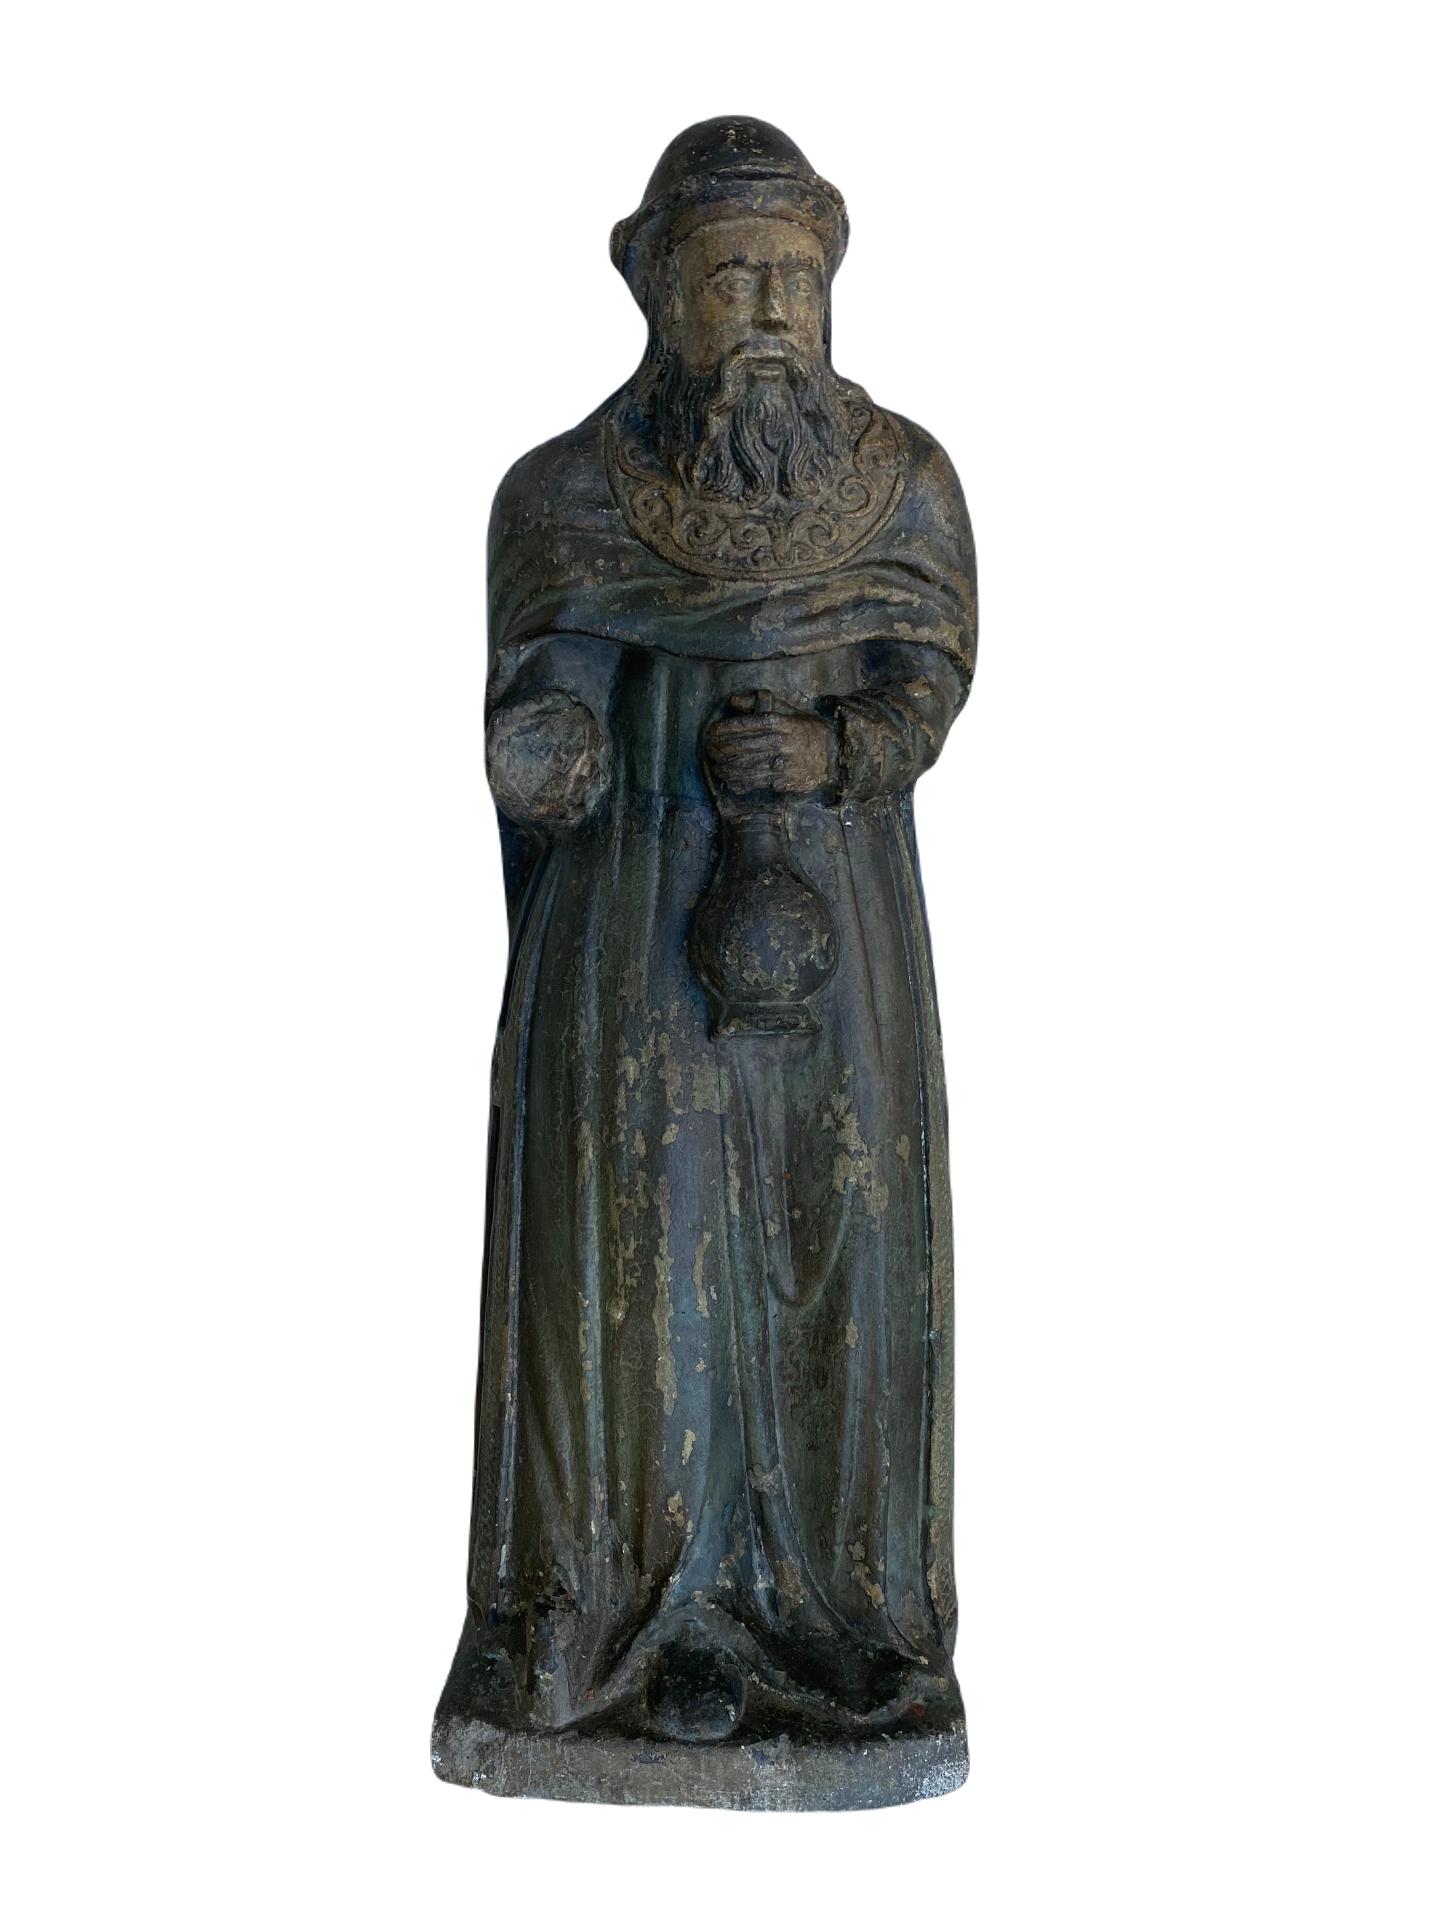 Unknown Figurative Sculpture - Pilgrim polychrome stone figure